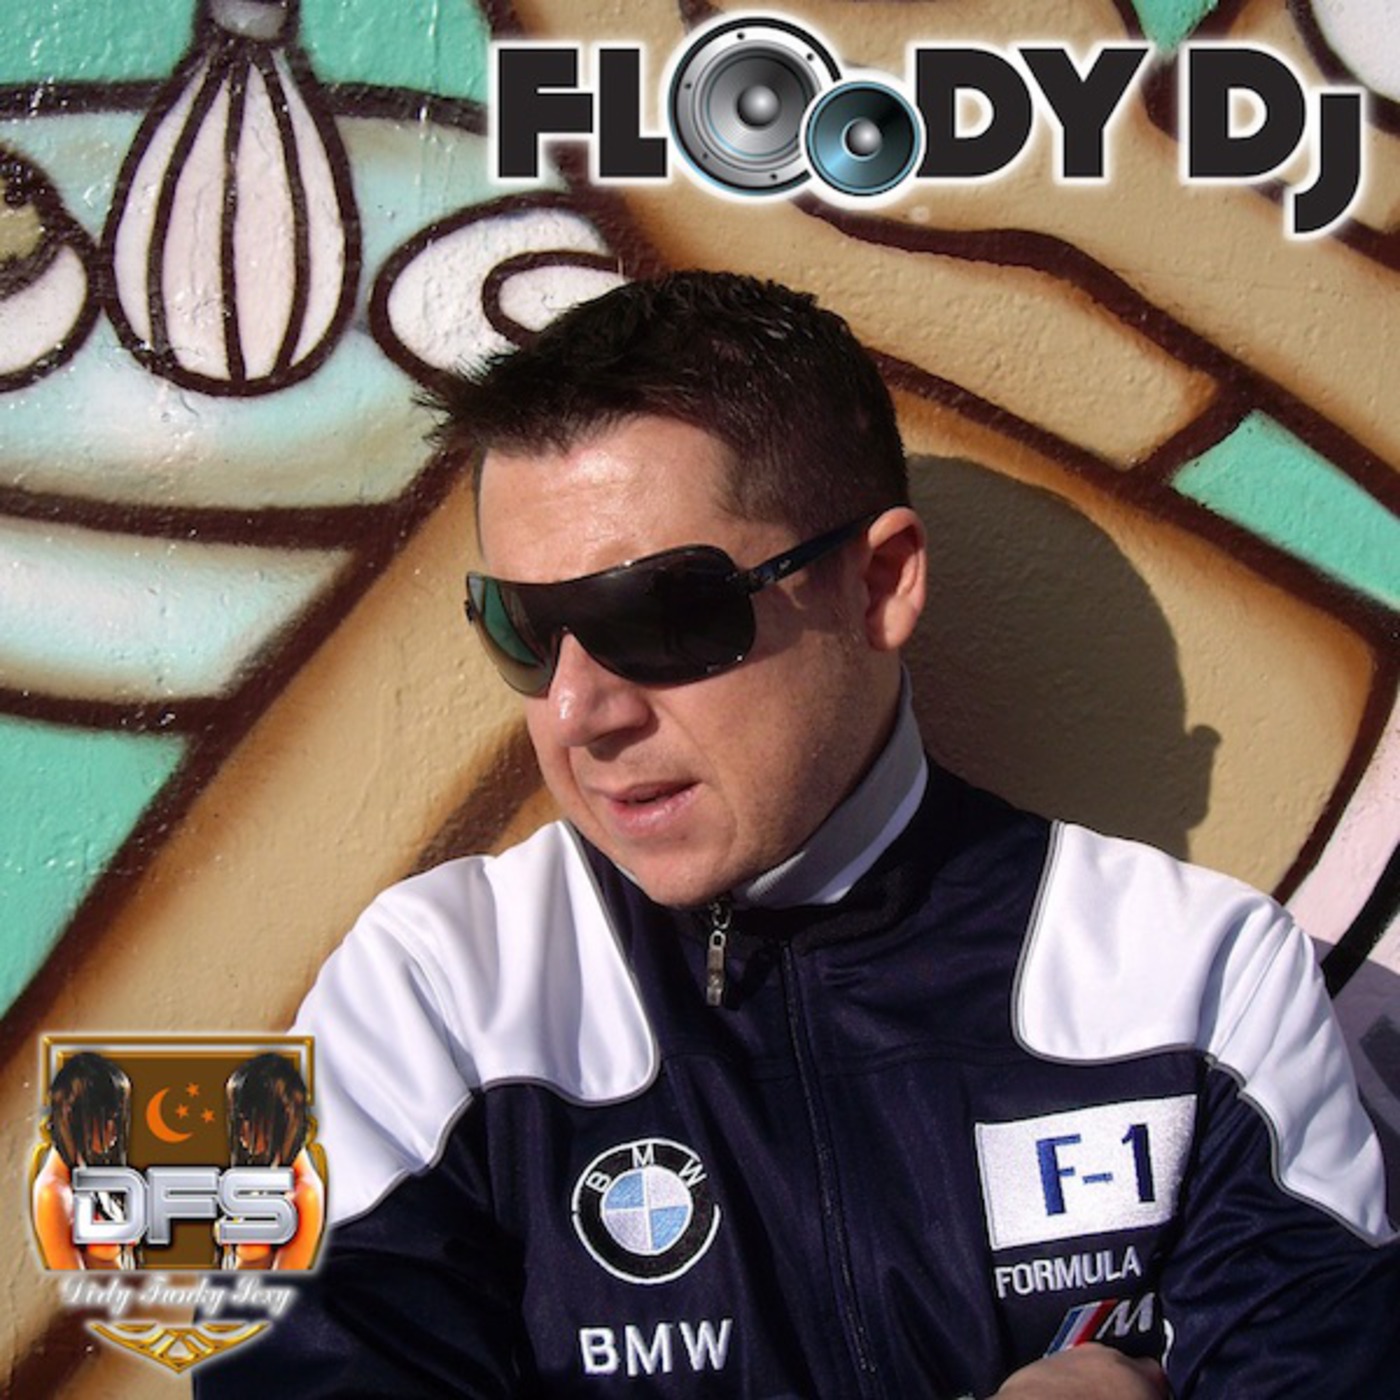 DFS Southern Sound System - Floody DJ